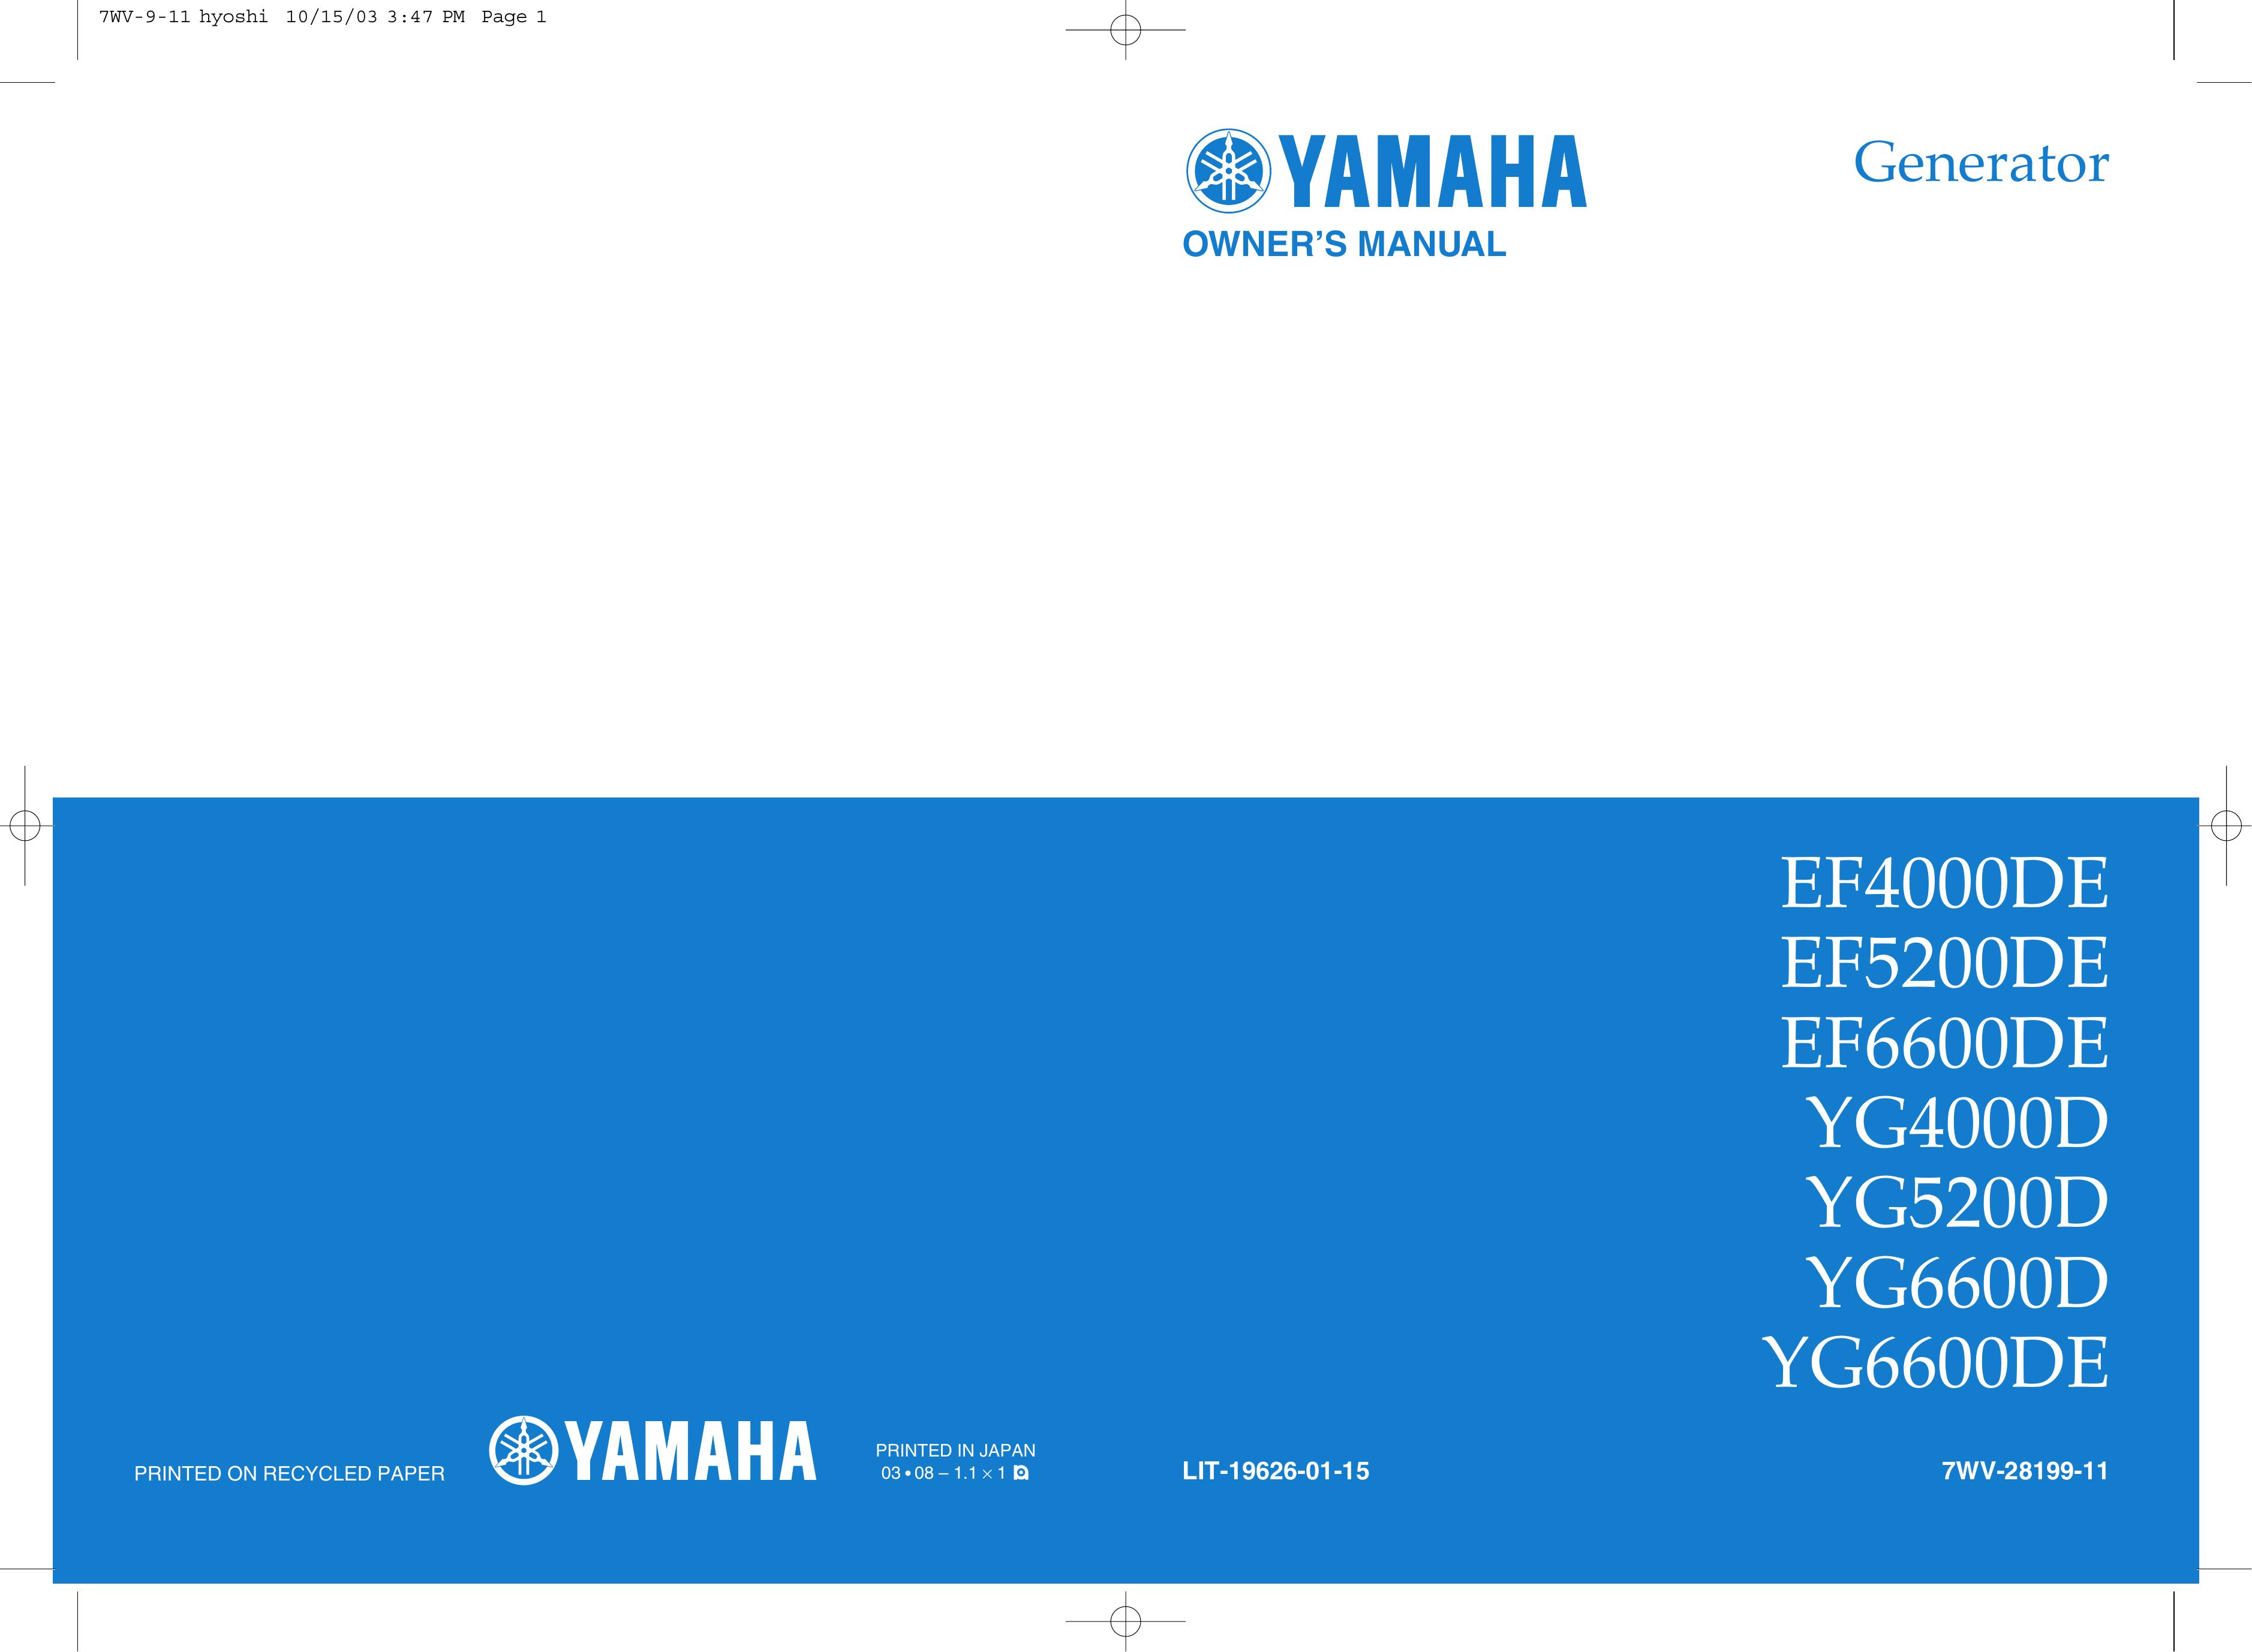 Yamaha YG4000D Portable Generator User Manual